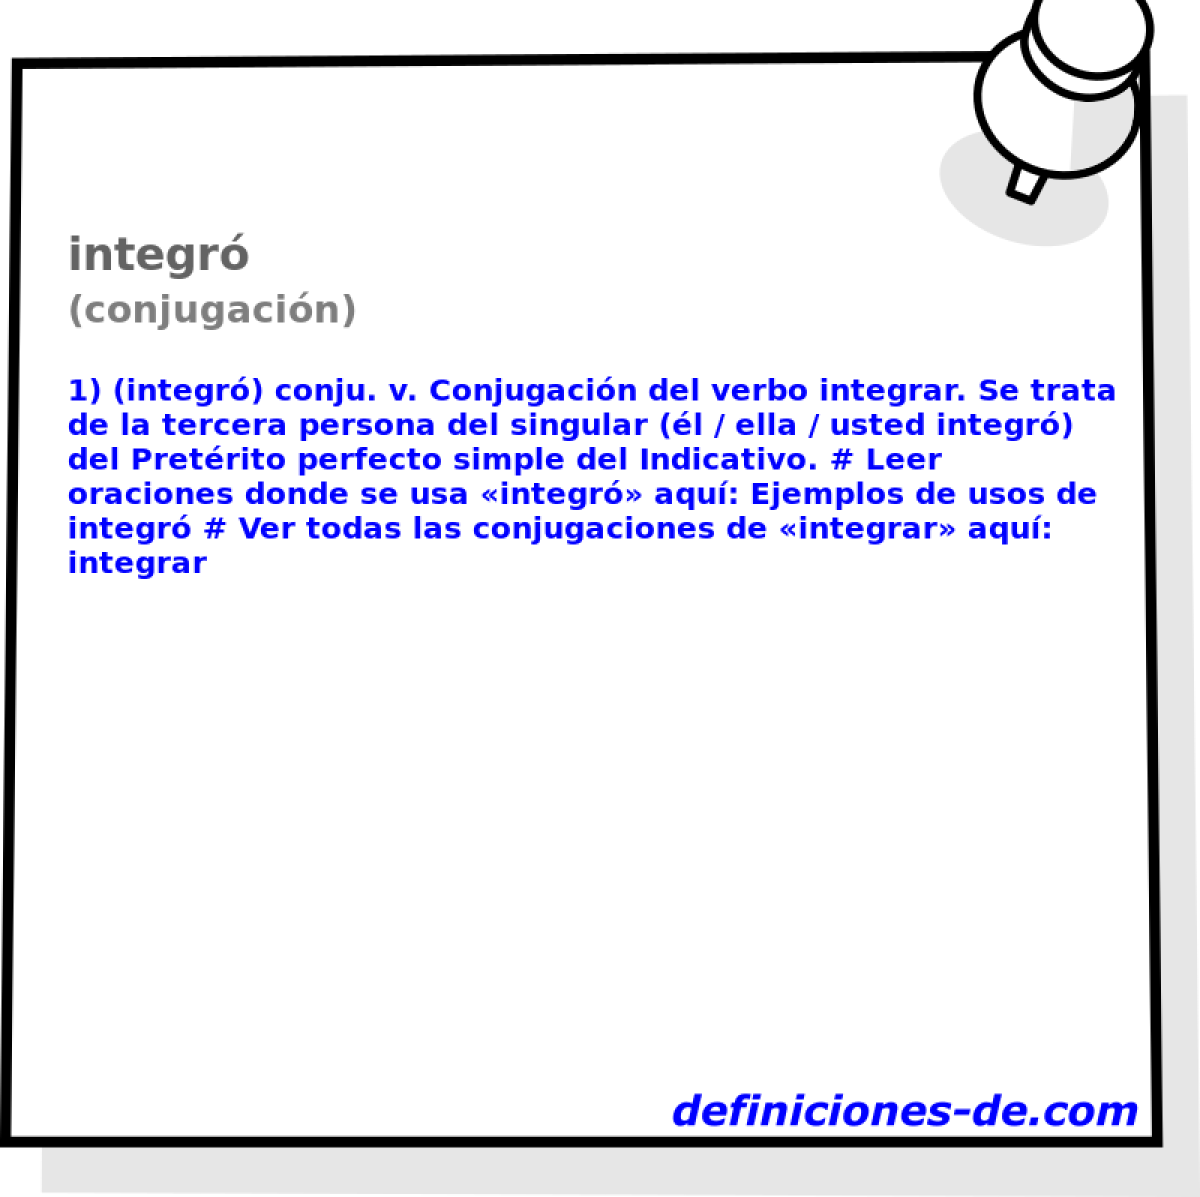 integr (conjugacin)